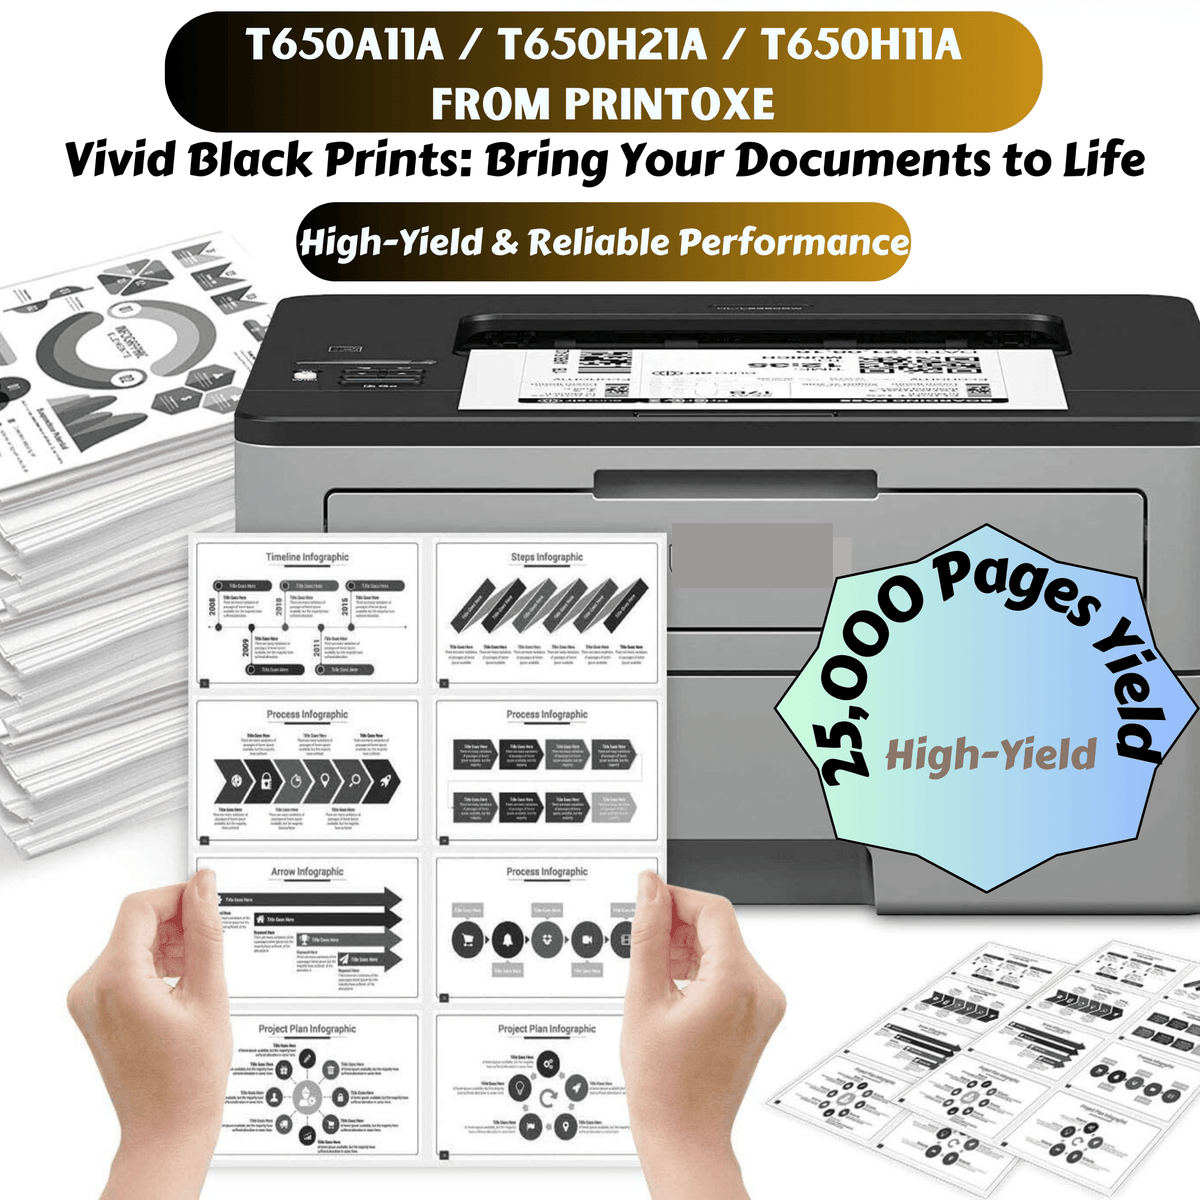 T650H21A / T650H11A / T650A11A Compatible Toner Cartridge Yield 25K Pages for Lexmark T650DN T650DTN T650N T652 T652DN T652DTN T654 T654DN T654DTN T656 T656DNE PRINTOXE Toner Cartridges